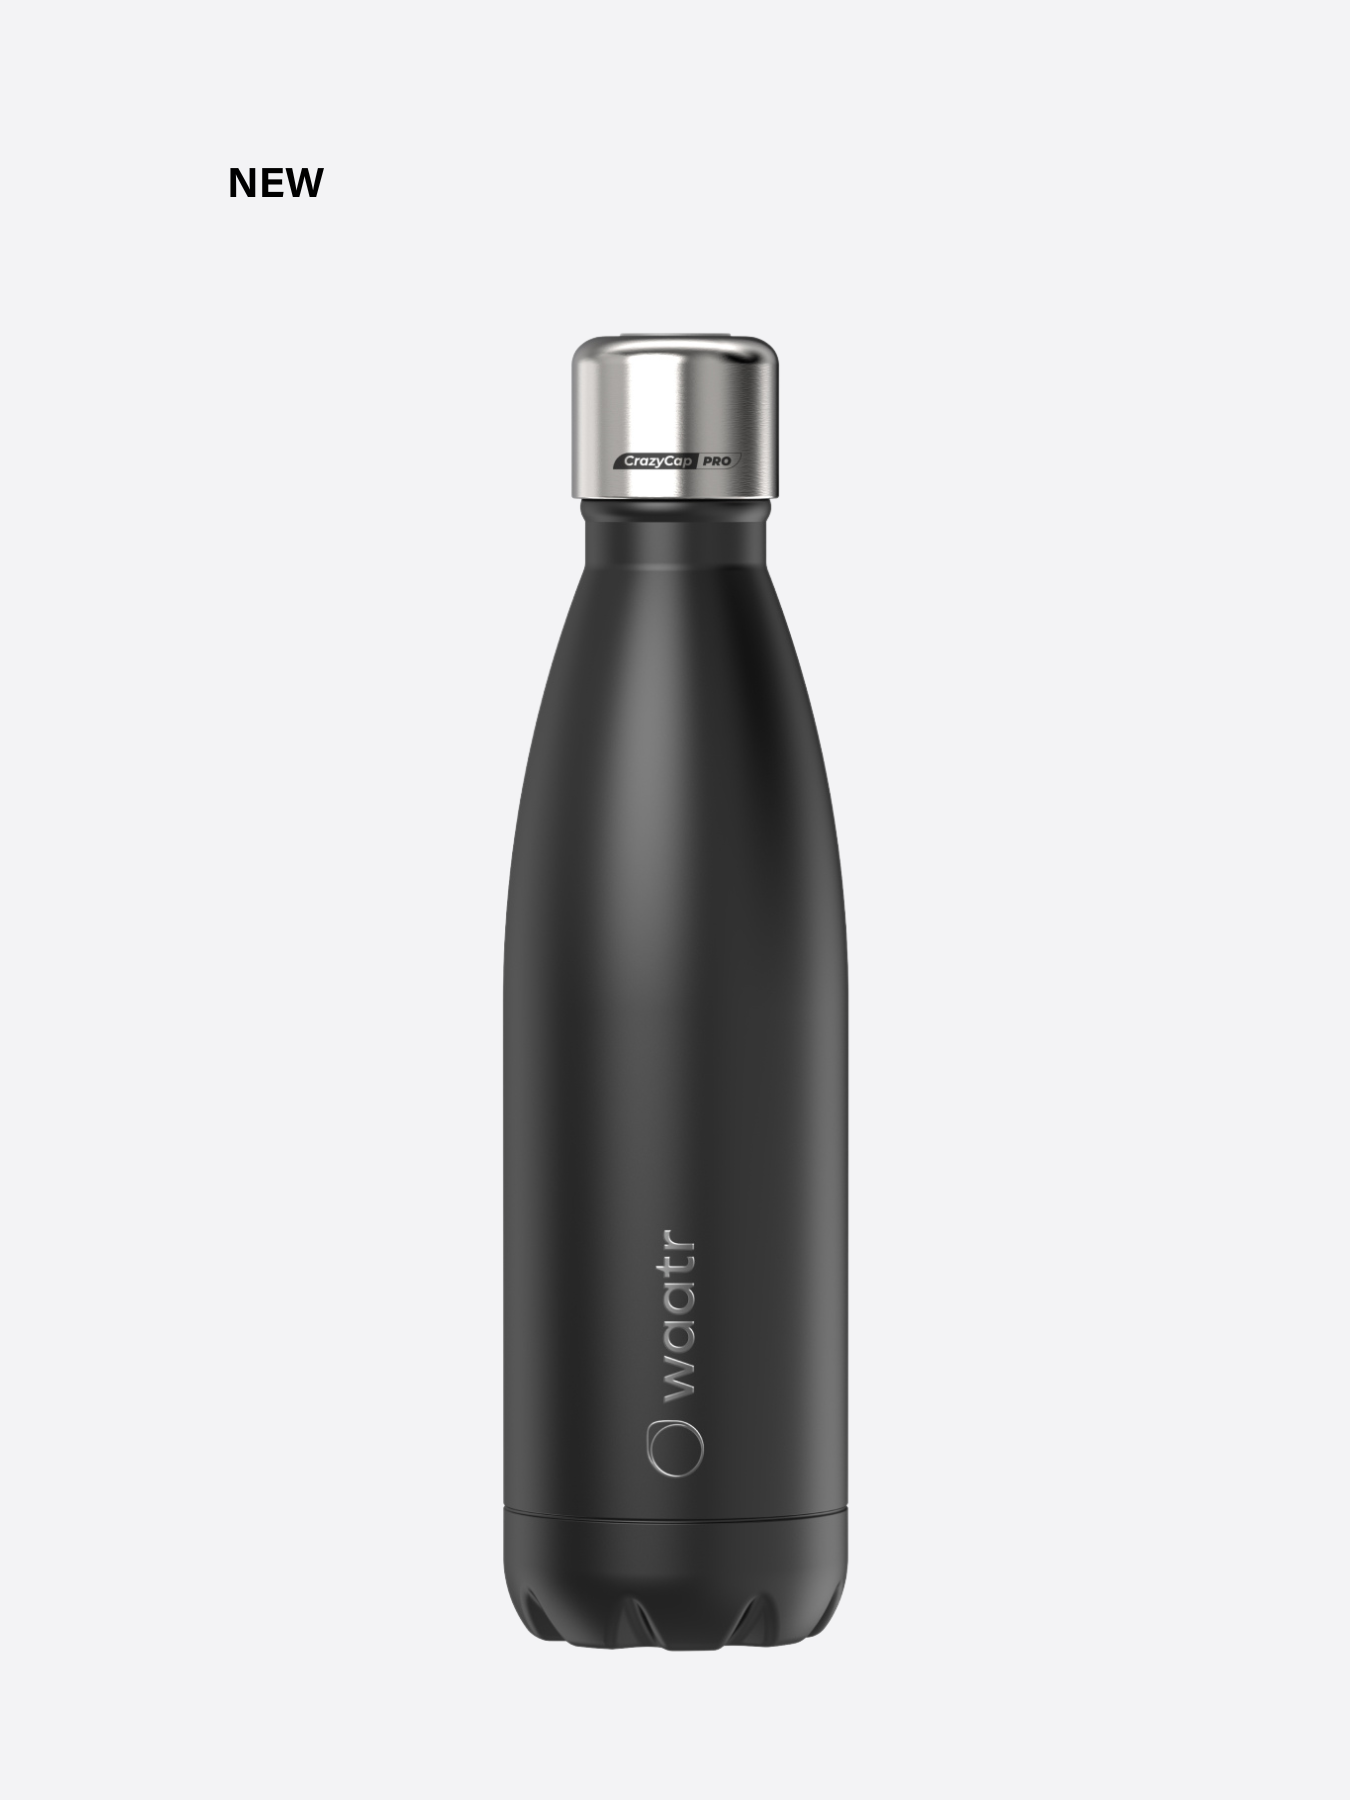 Waatr CrazyCap Pro UV Water Purifier Bottle - Onyx